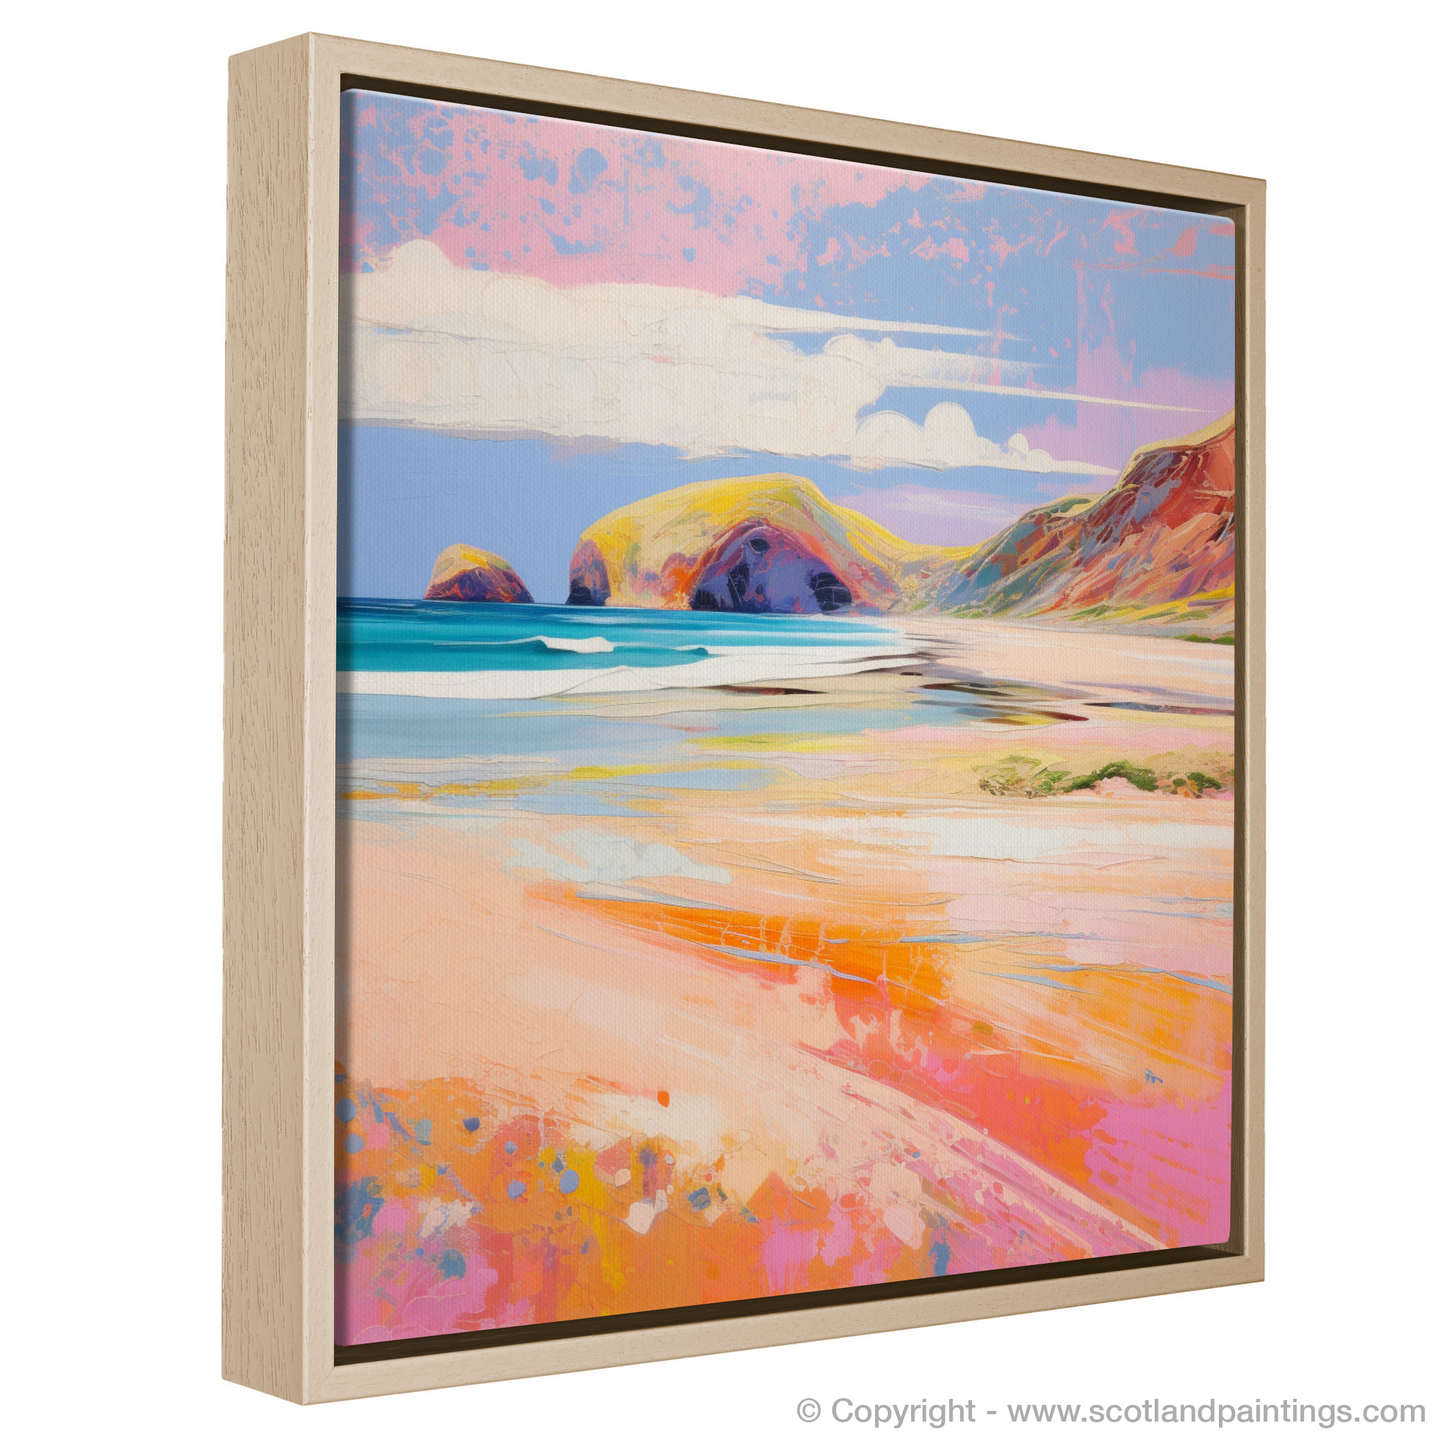 Painting and Art Print of Sandwood Bay, Sutherland in summer entitled "Summer Splendour at Sandwood Bay".